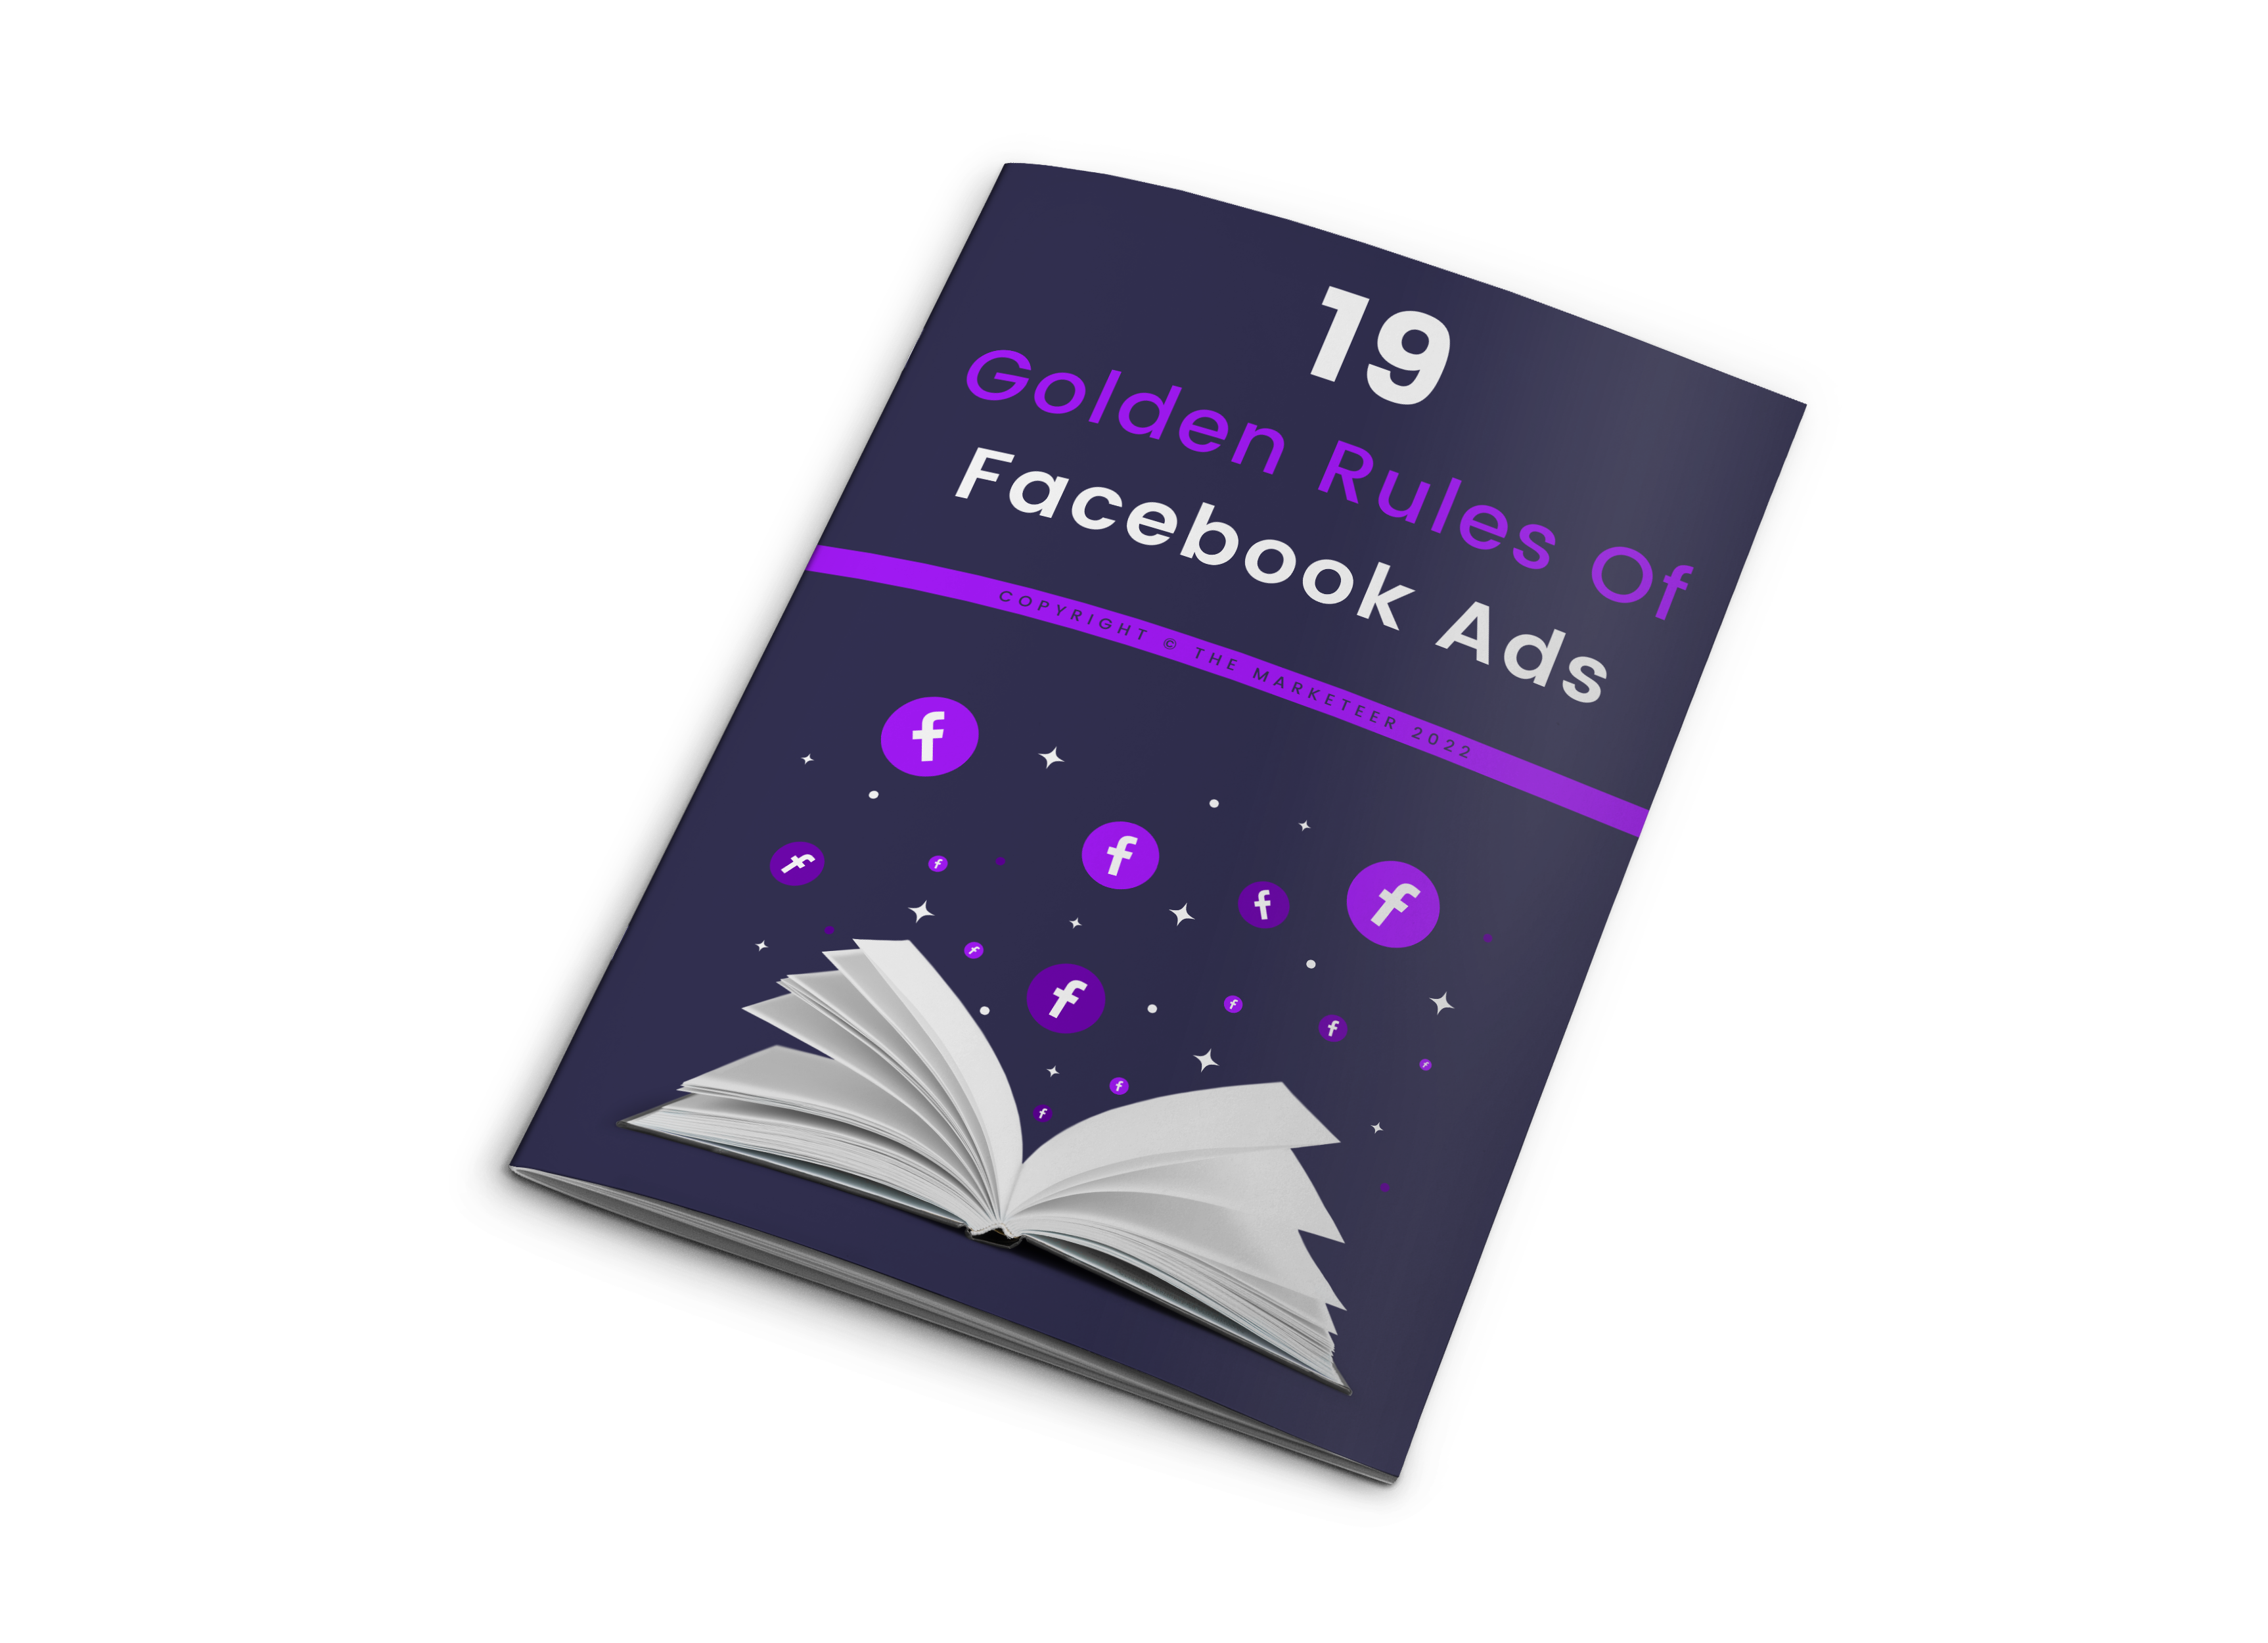 19 Golden Rules Of Facebook Ads